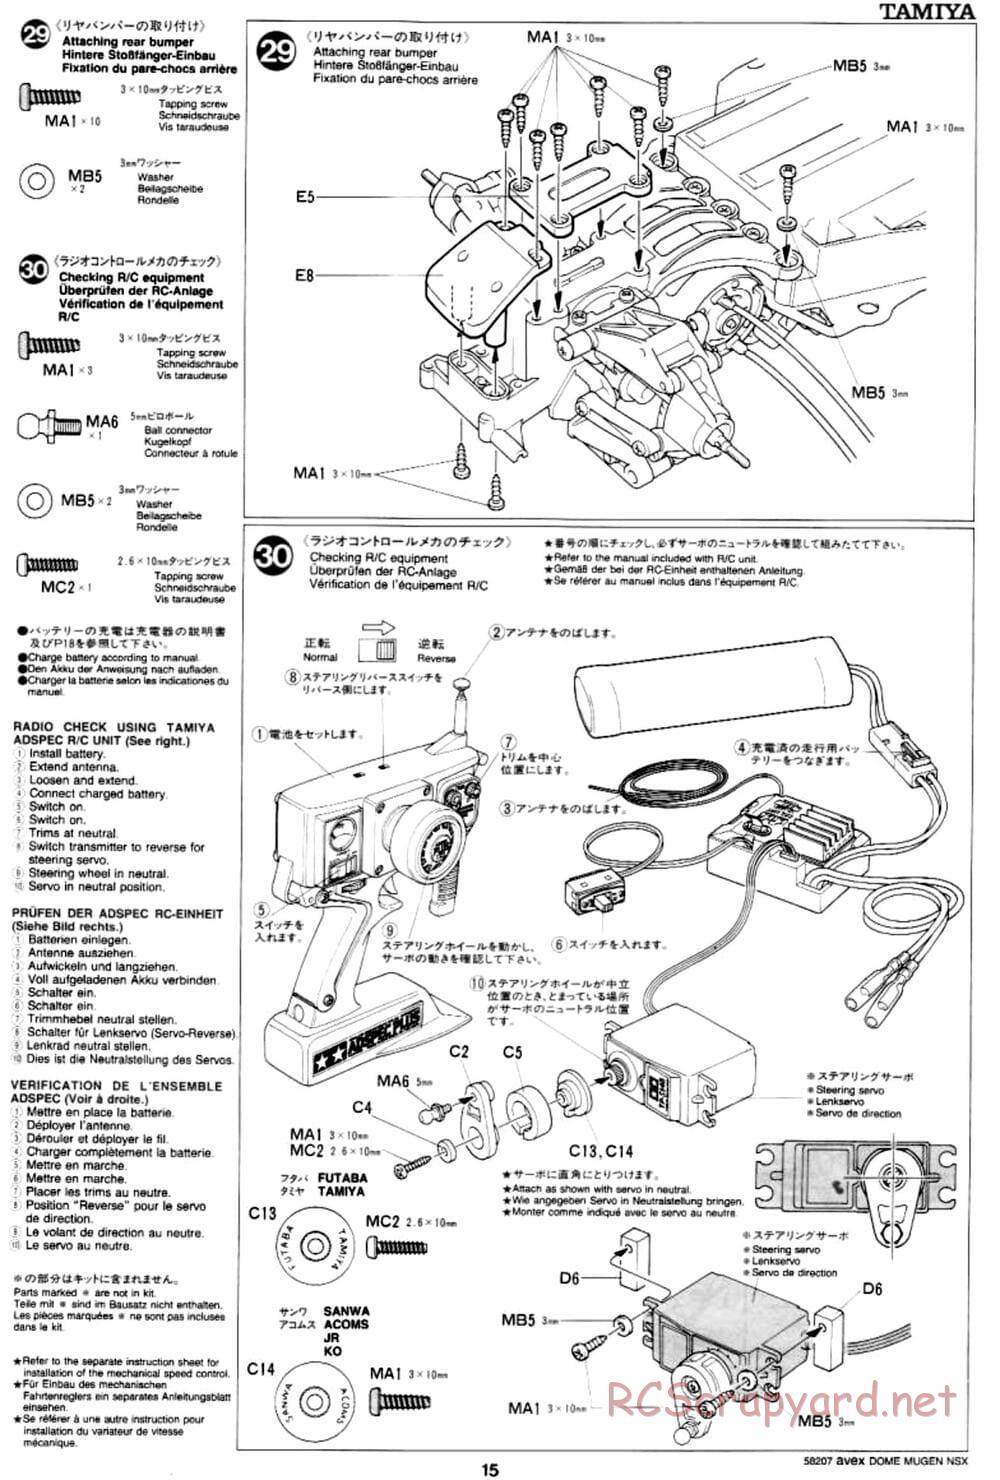 Tamiya - Avex Dome Mugen NSX - TA-03R Chassis - Manual - Page 15